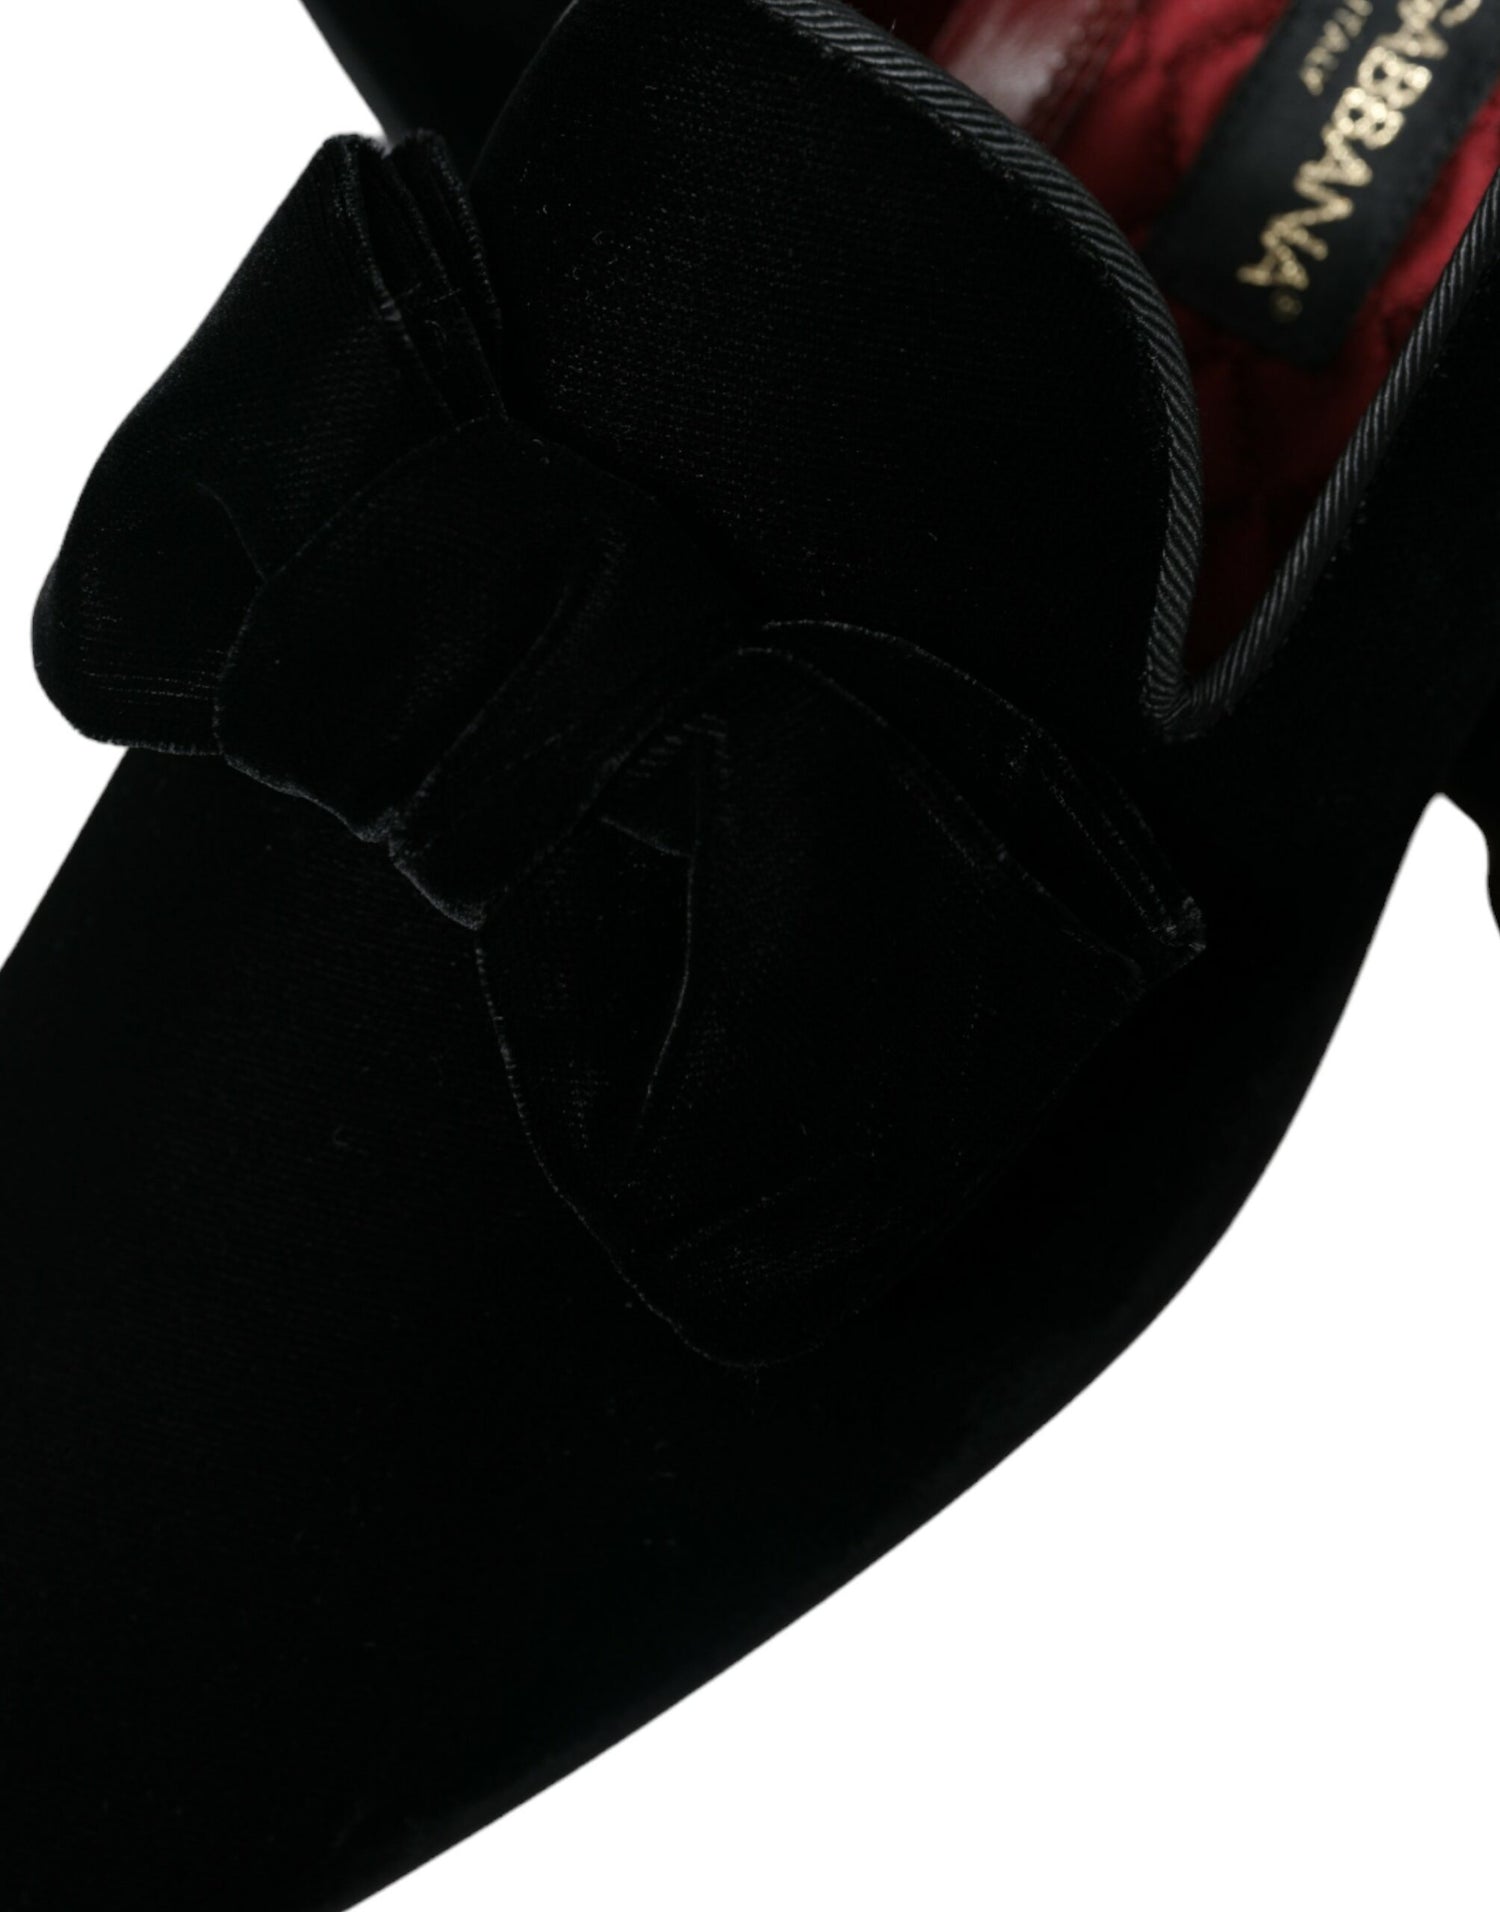 Dolce & Gabbana Black Velvet Loafers Formal Dress Shoes - DEA STILOSA MILANO